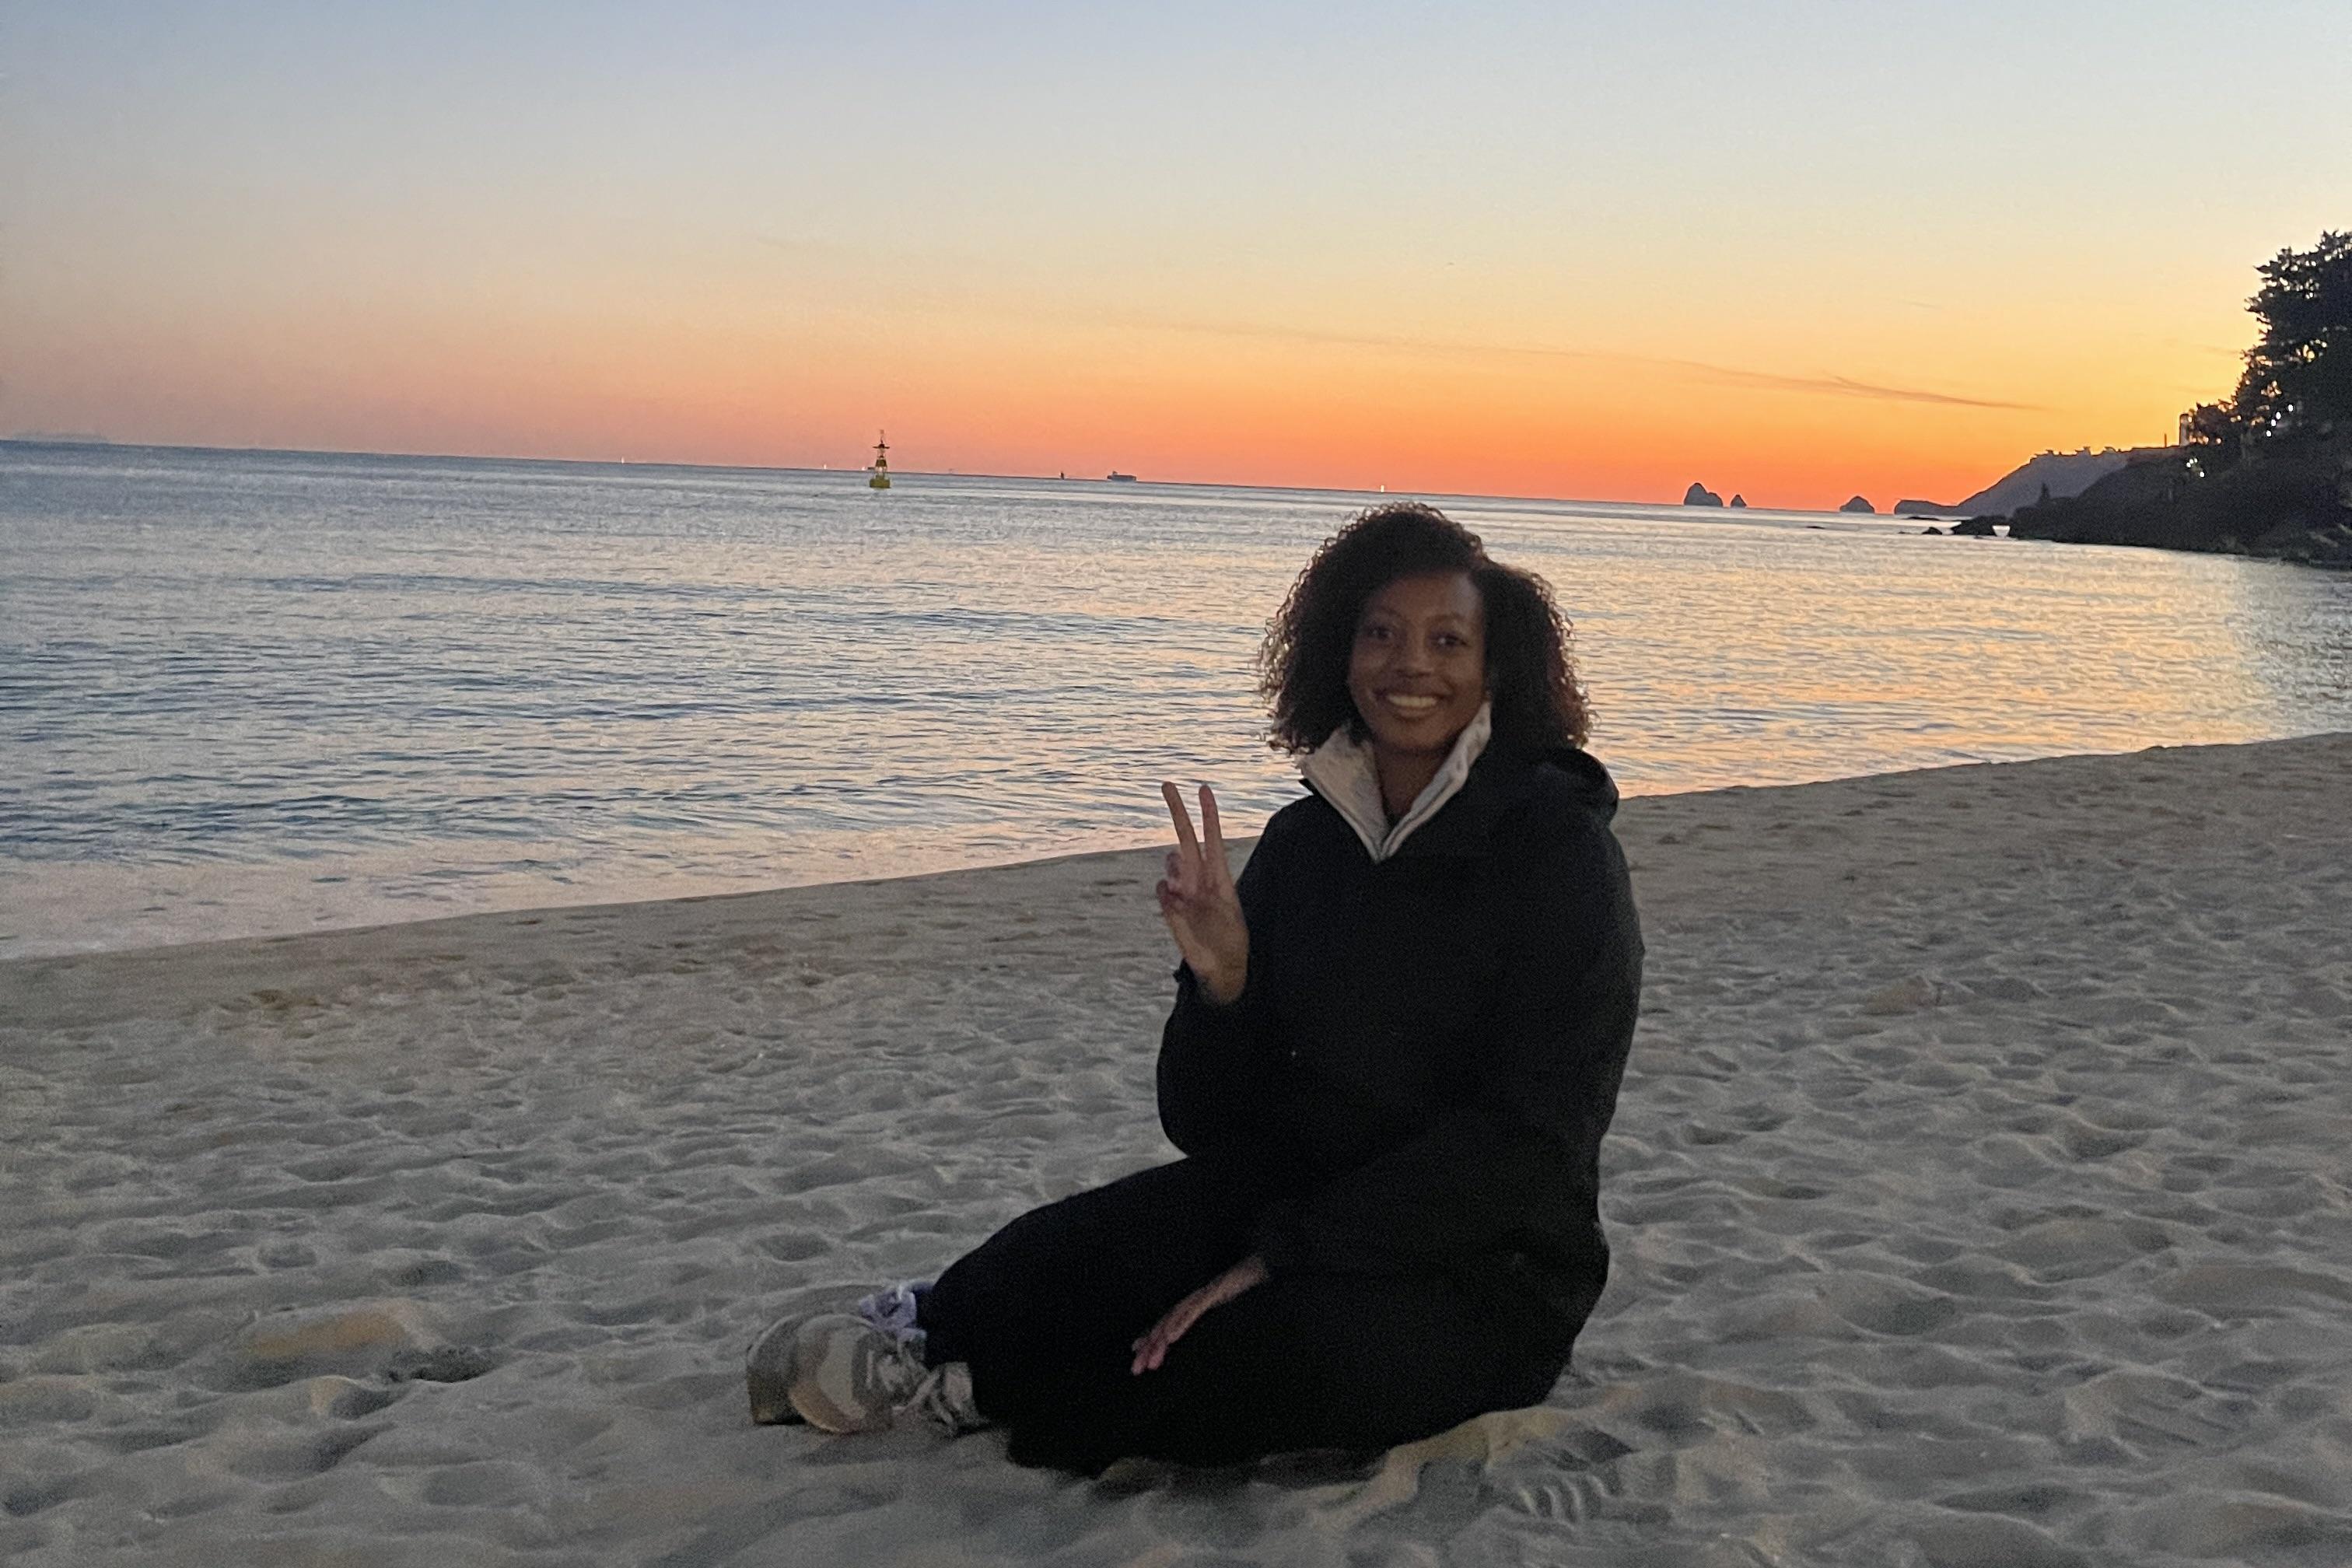 Alyssa Taylor sits on a beach a sunset